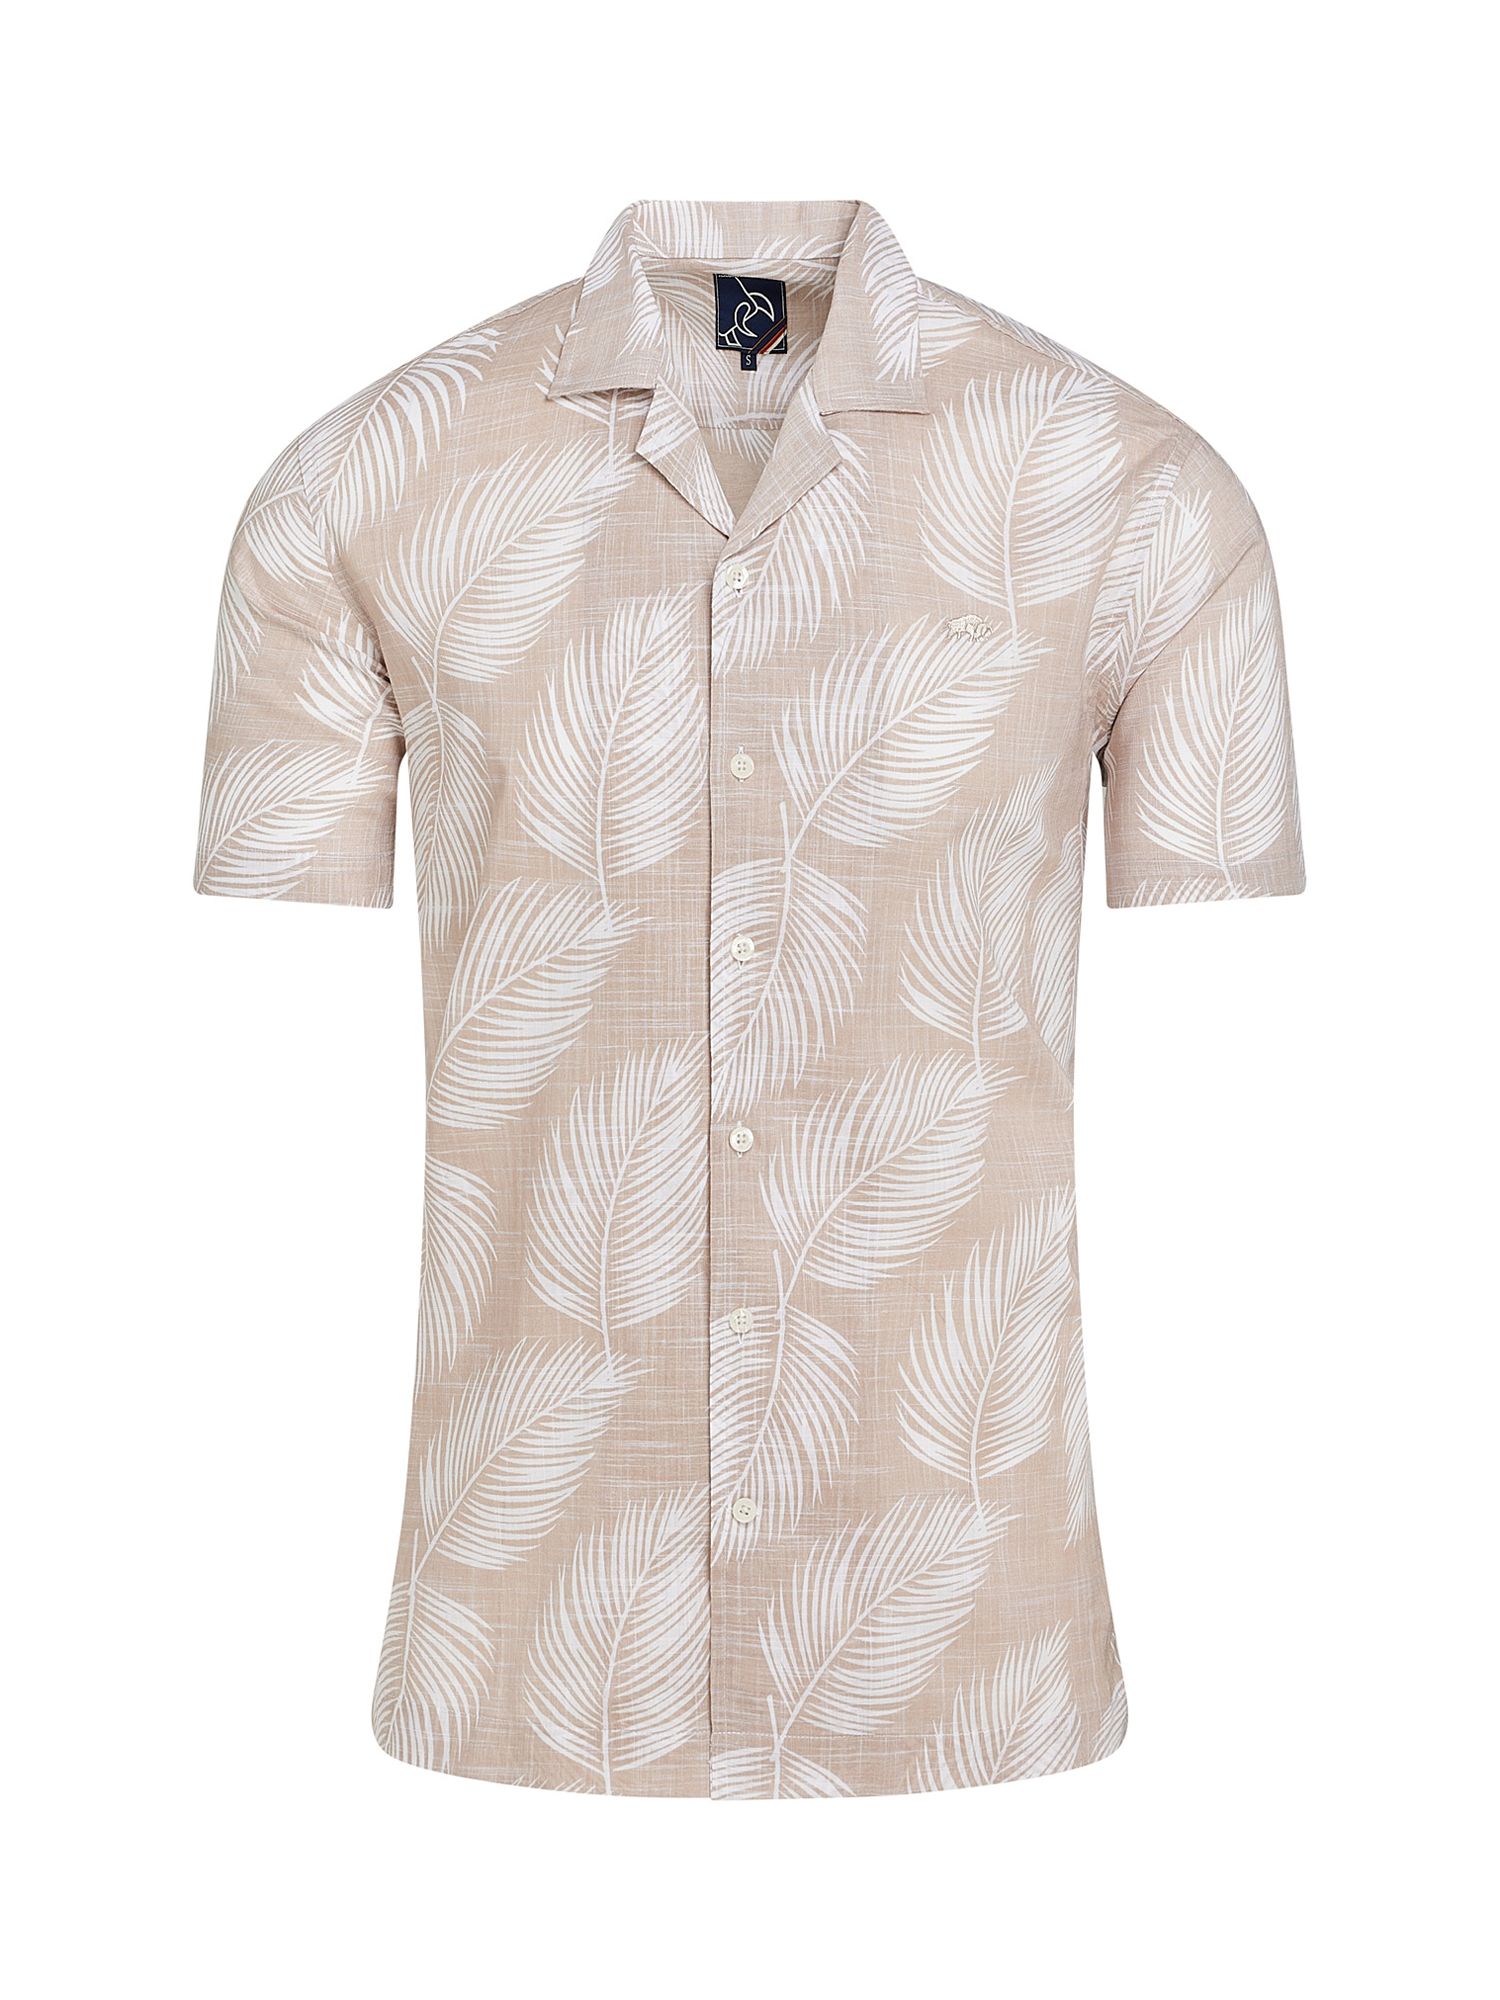 Raging Bull Palm Leaf Cotton Shirt, Brown/White, S